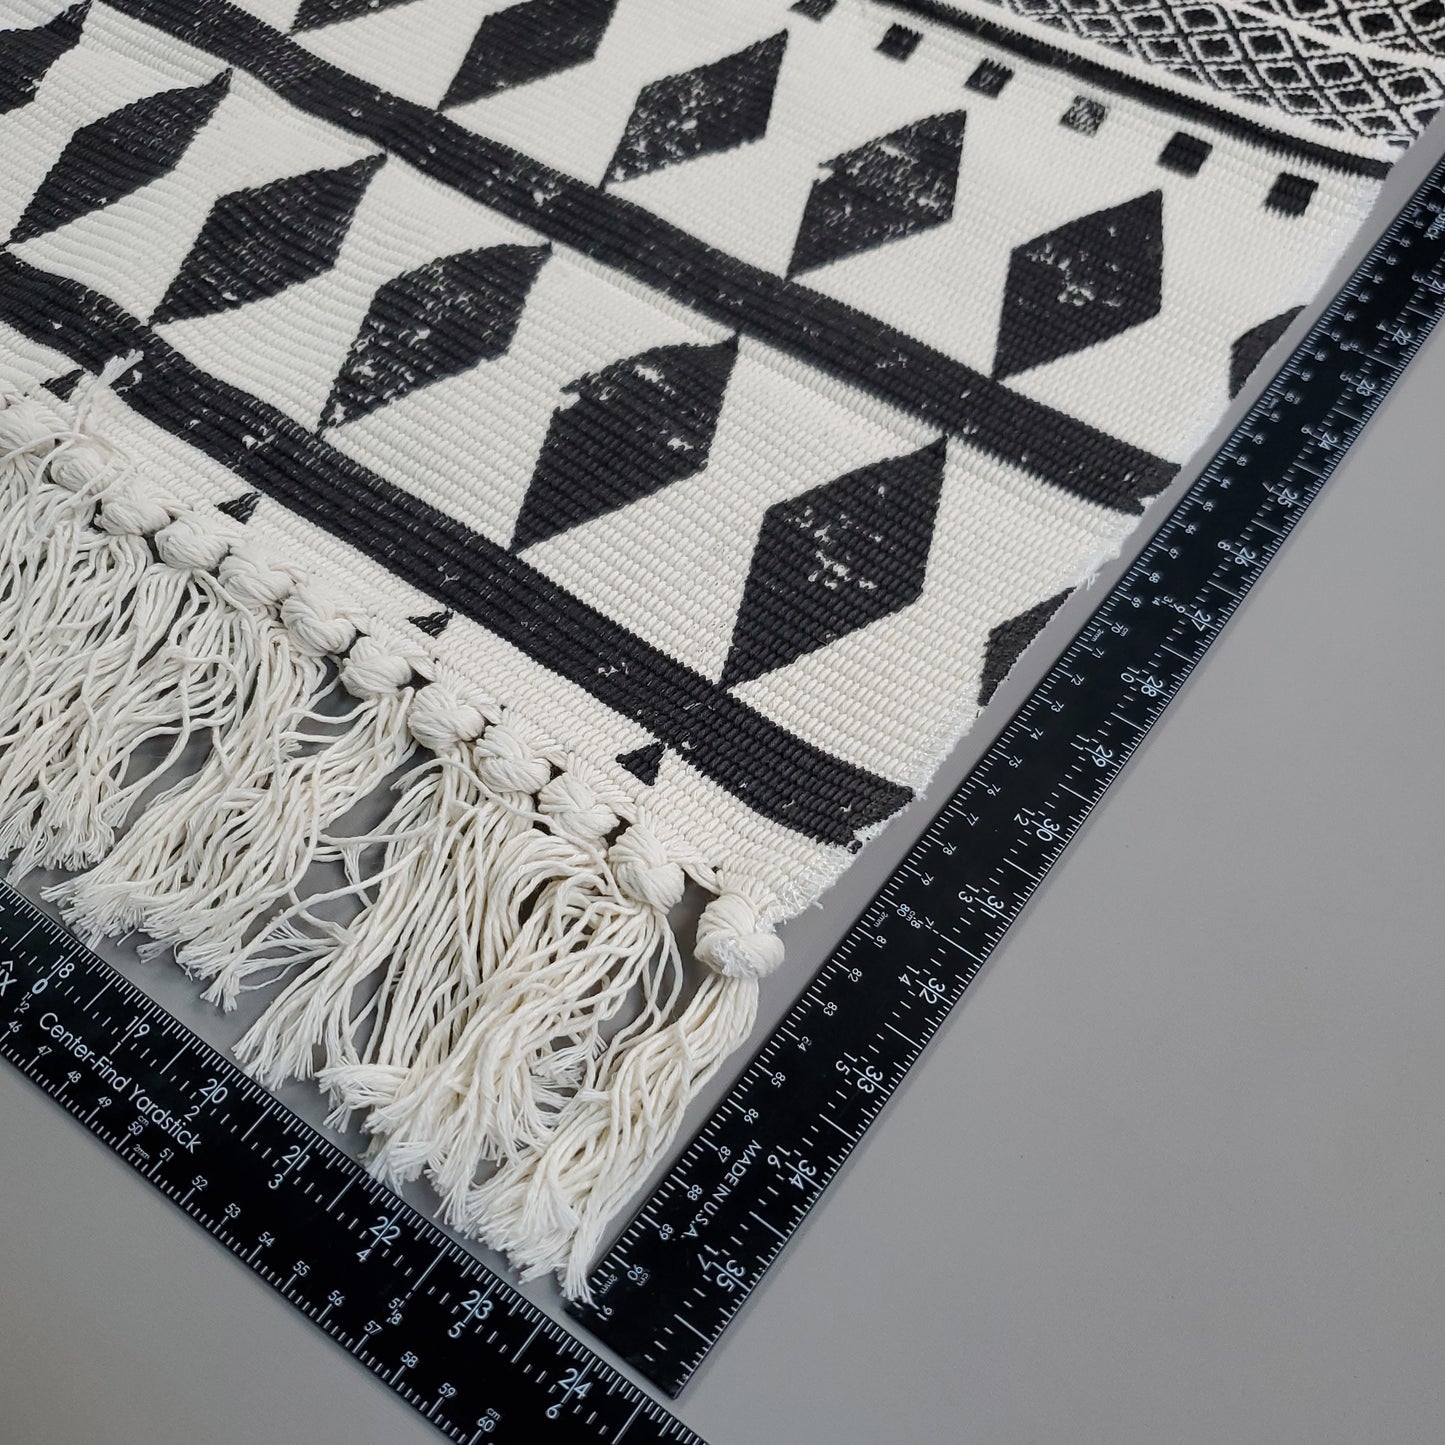 USTIDE Cotton Tassel Kilim Carpet Indian Hand Woven Braided Rug 2'x4'3" Black/Cream (New)